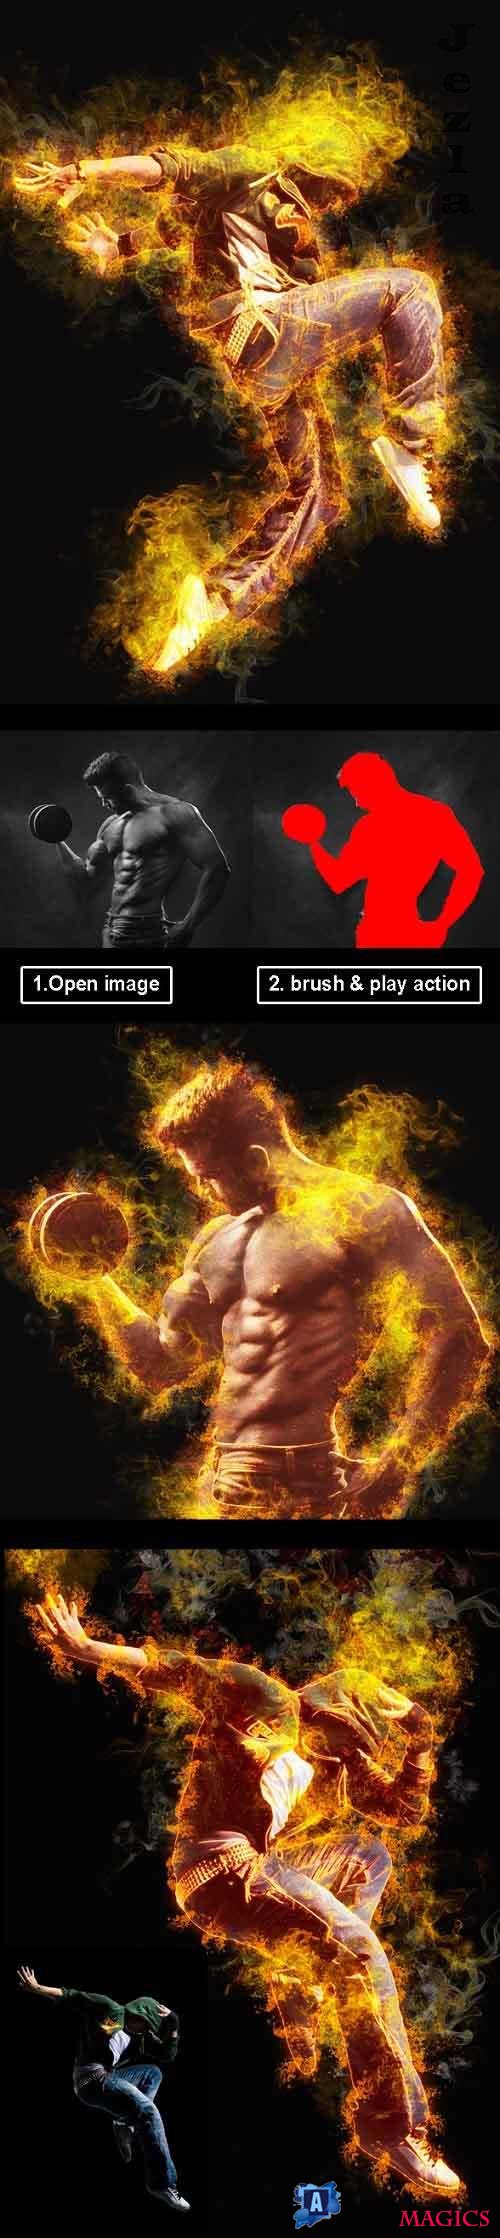 Amazing Flame Photoshop Action Vol 2 28223950